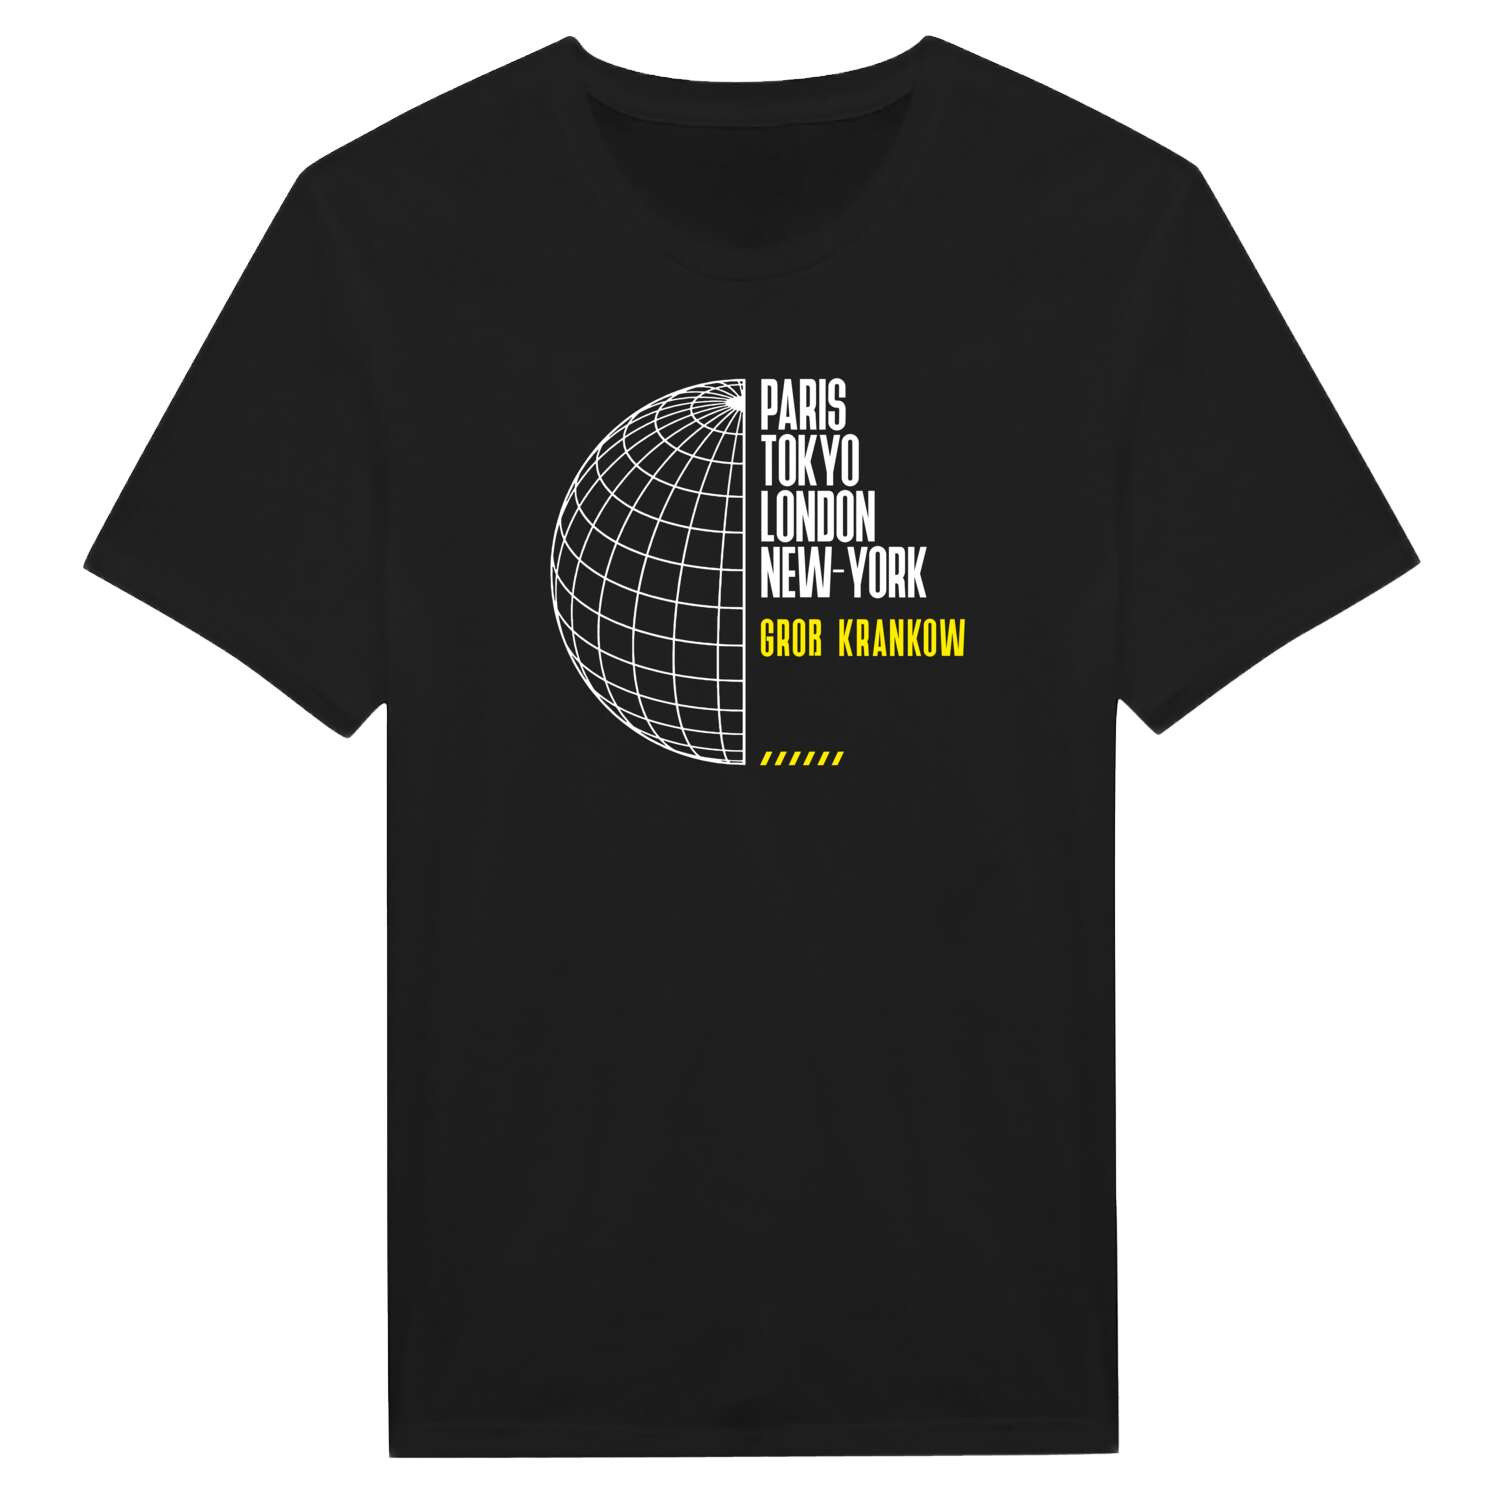 Groß Krankow T-Shirt »Paris Tokyo London«